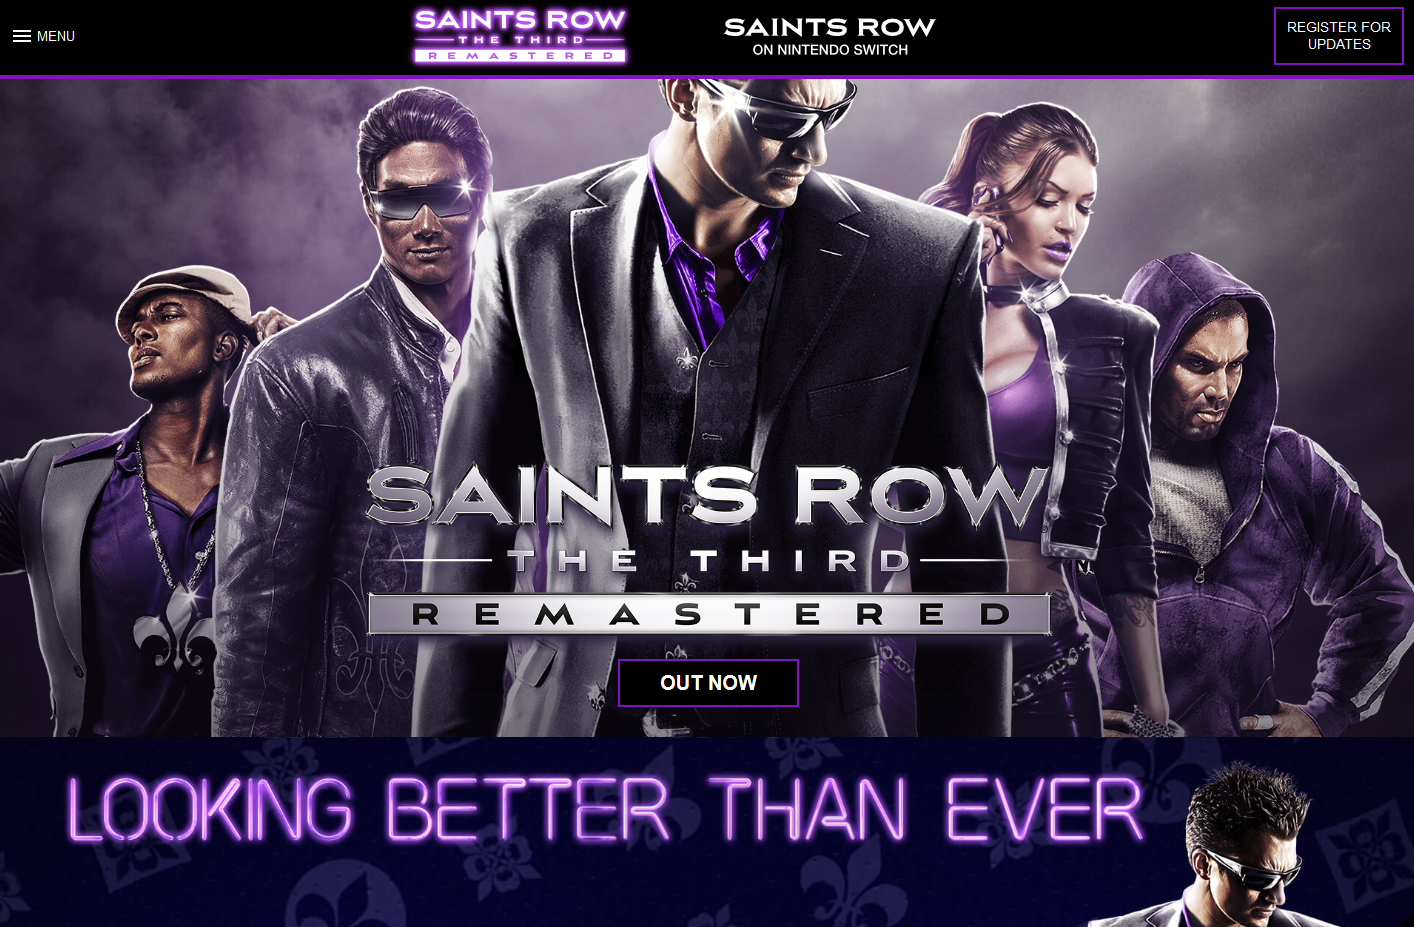 The homepage of Saints Row